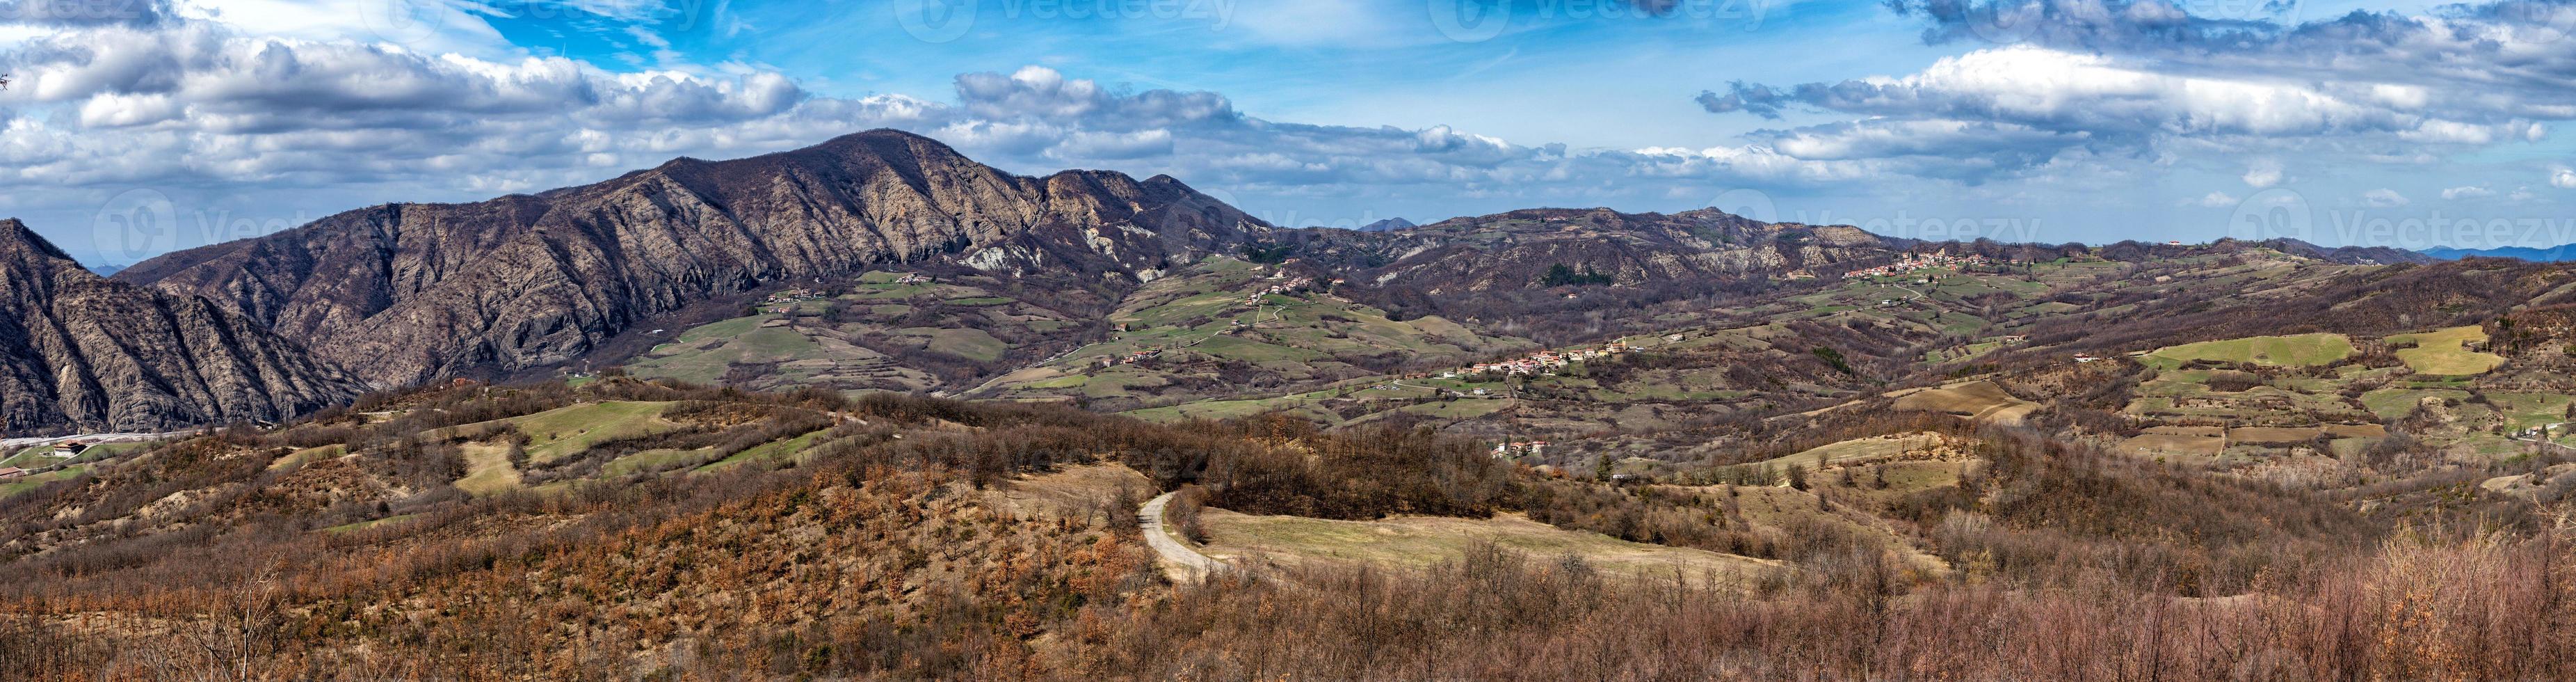 giarolo bergen Italiaans platteland dorp antenne visie foto